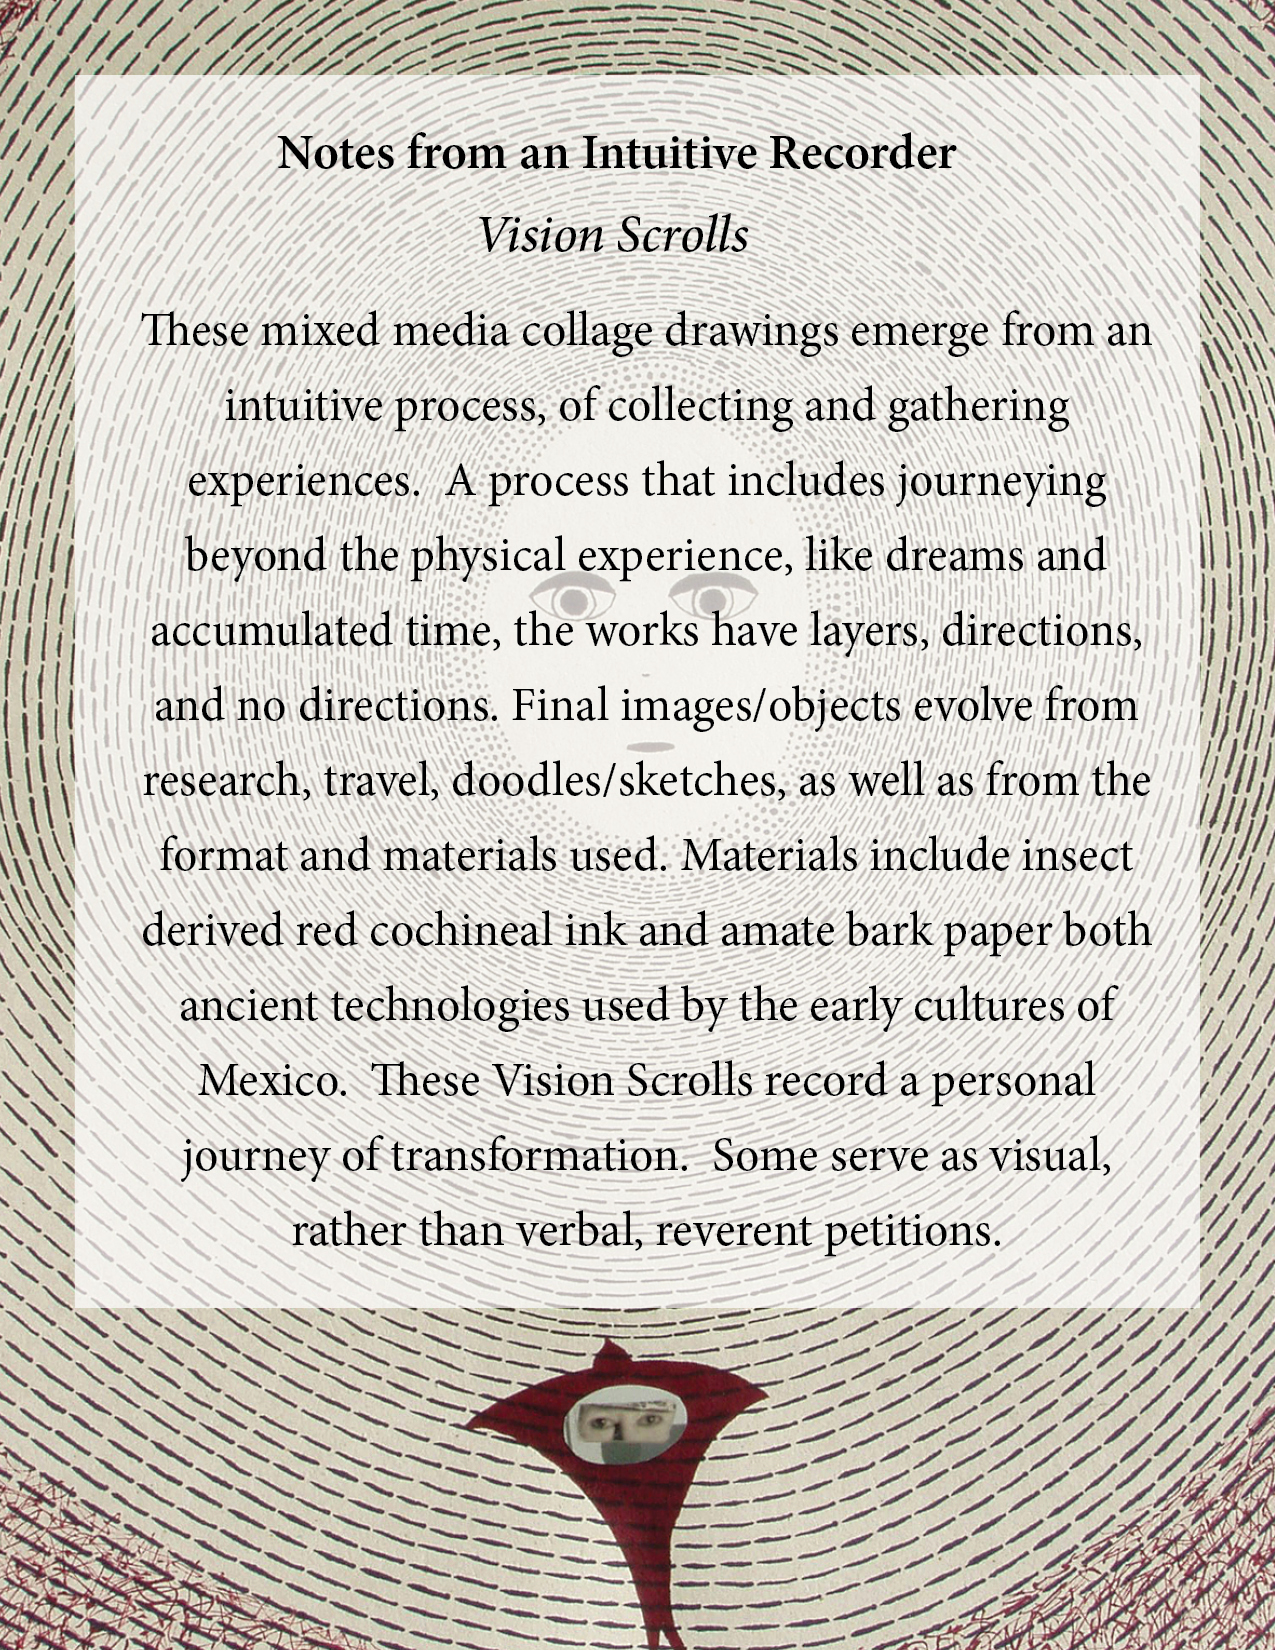 VisionScrolls-Text&Image.jpg